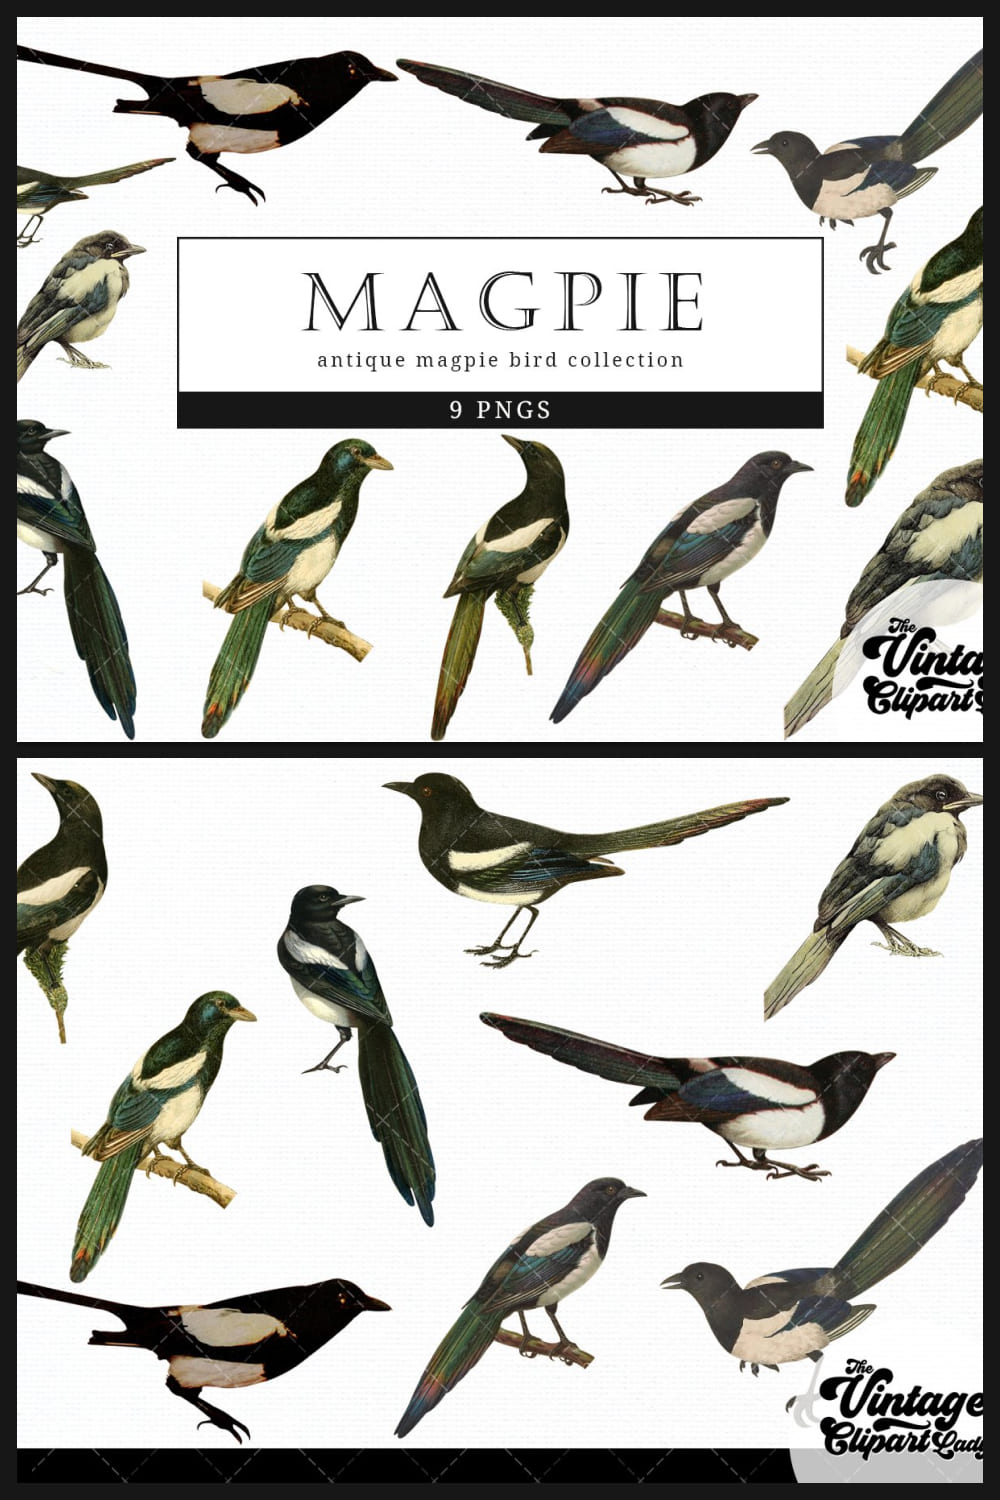 Magpie vintage bird illustration clip art - pinterest image preview.